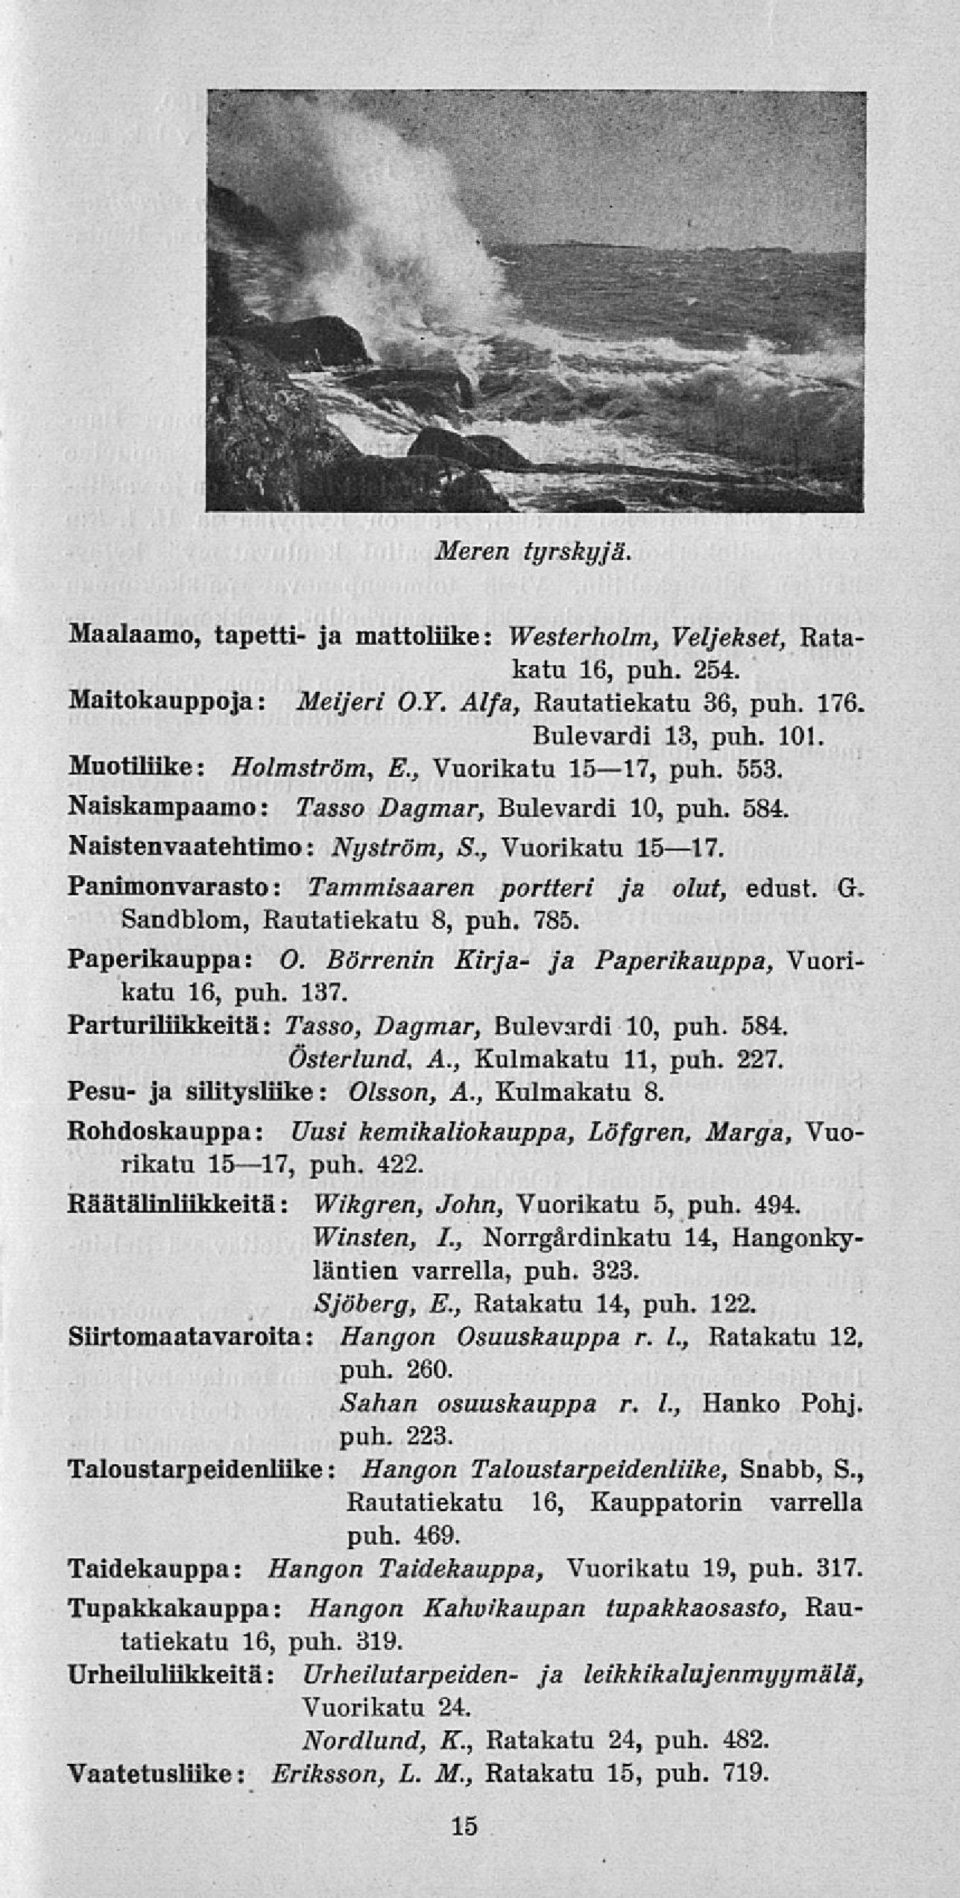 G. Sandblom, Rautatiekatu 8, puh. 785. Paperikauppa: O. Börrenin Kirja- ja Paperikauppa, Vuorikatu 16, puh. 137. Parturiliikkeitä: Tasso, Dagmar, Bulevardi 10, puh. 584. Österlund, A.